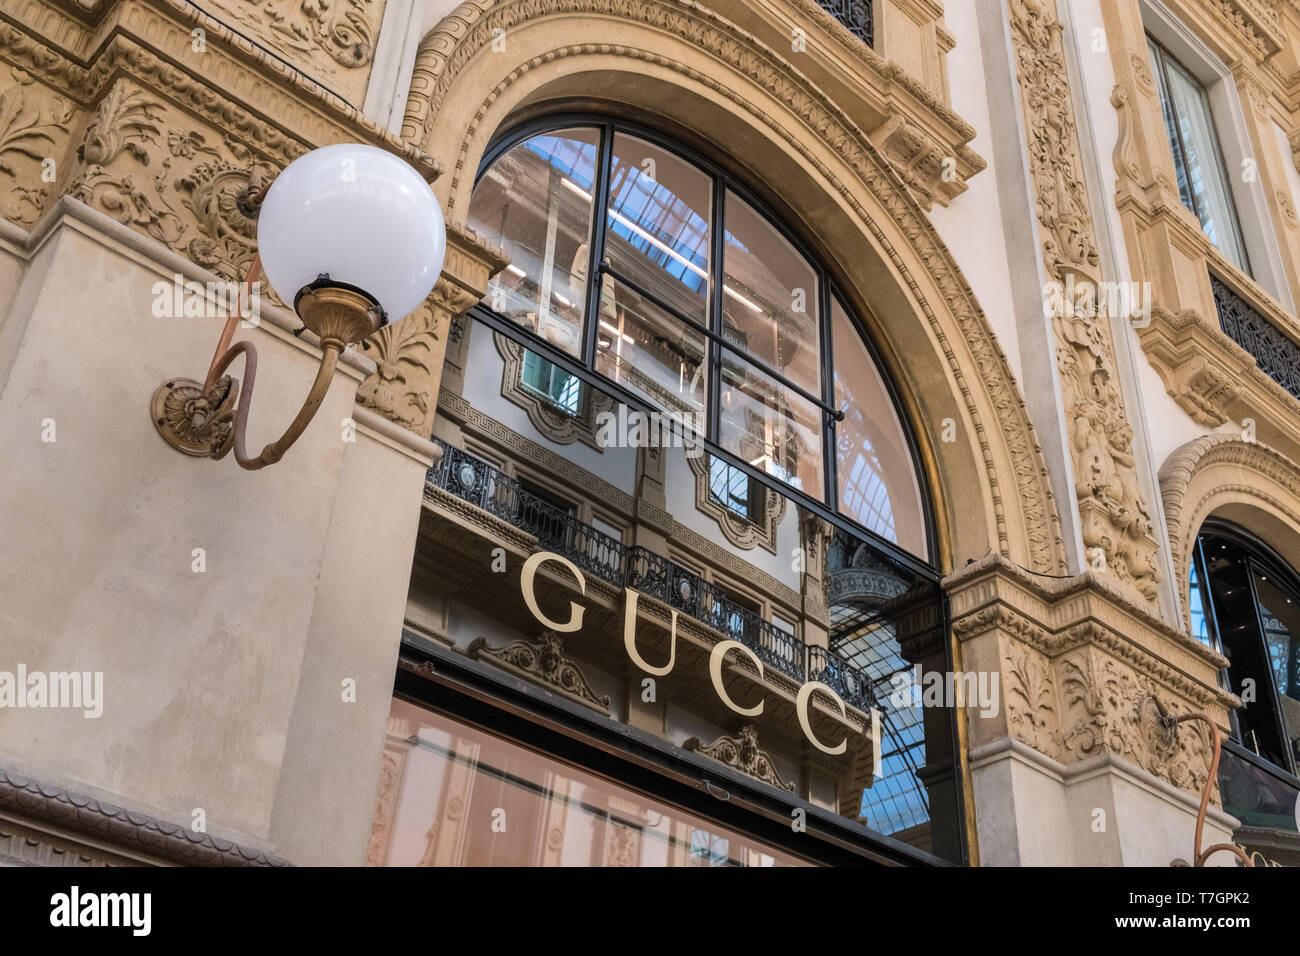 Gucci store, Galleria Vittorio shopping arcade interior, Milan, Italy Stock Photo - Alamy